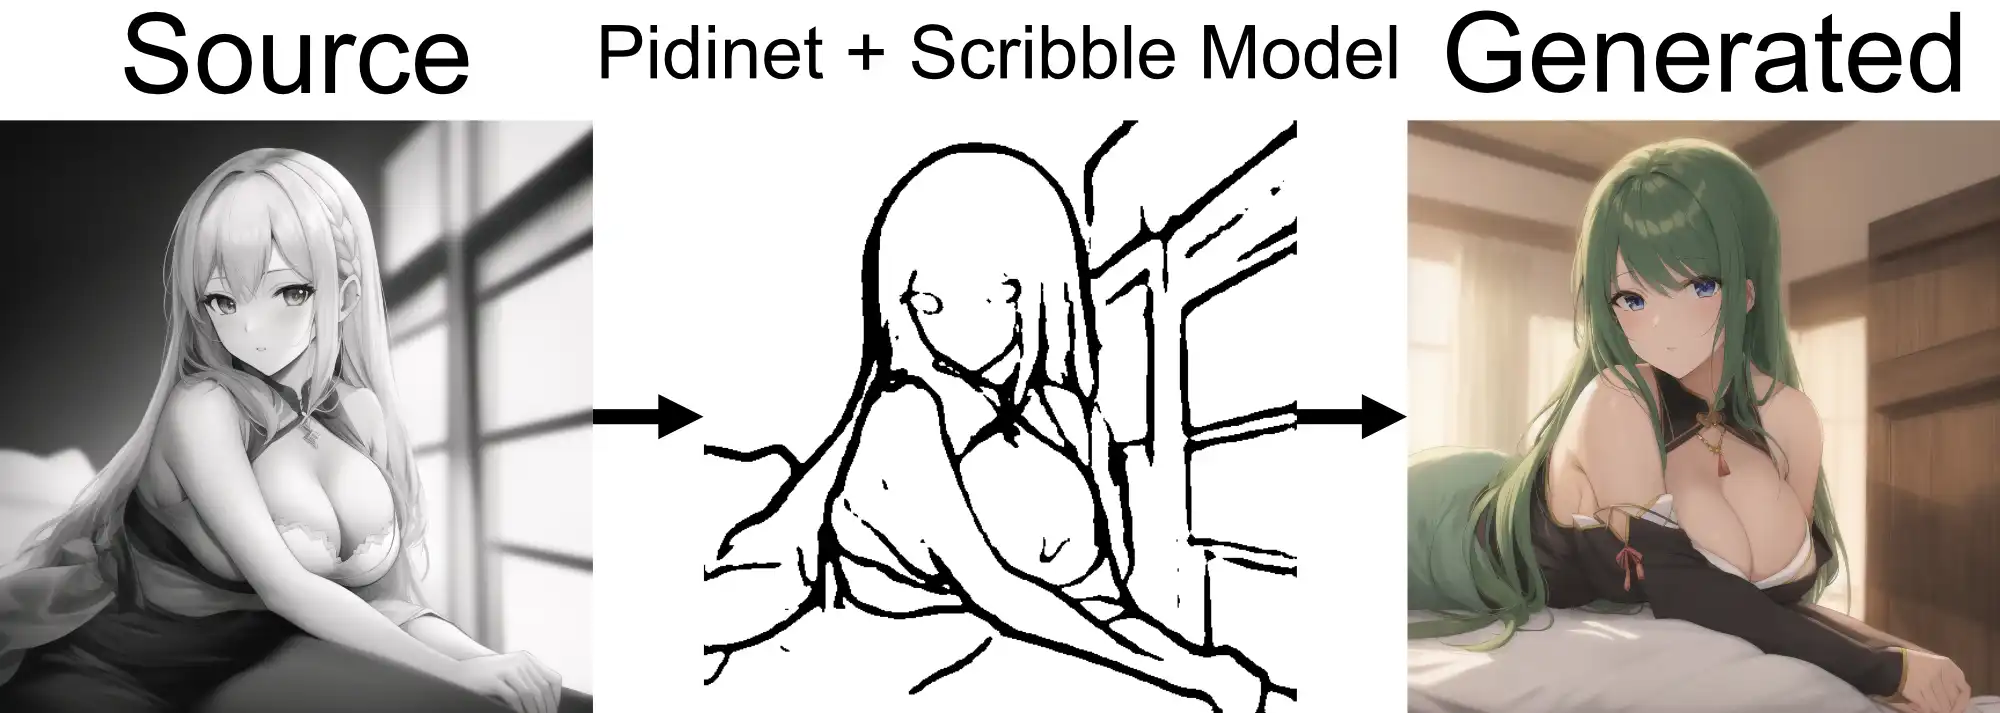 Pidinet + scribble model